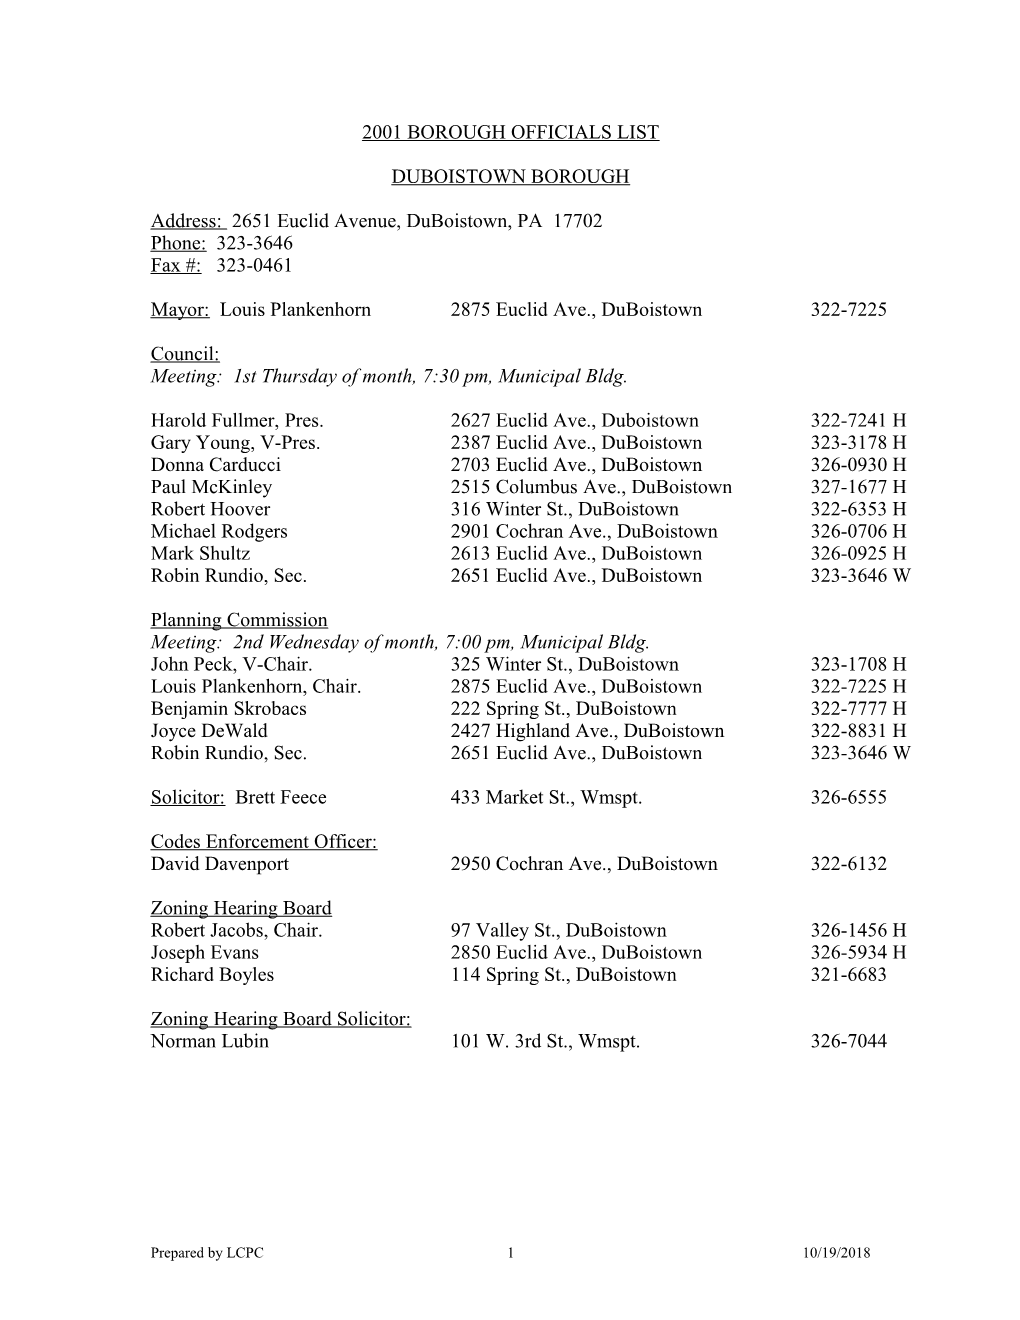 95 Boro. Officials List